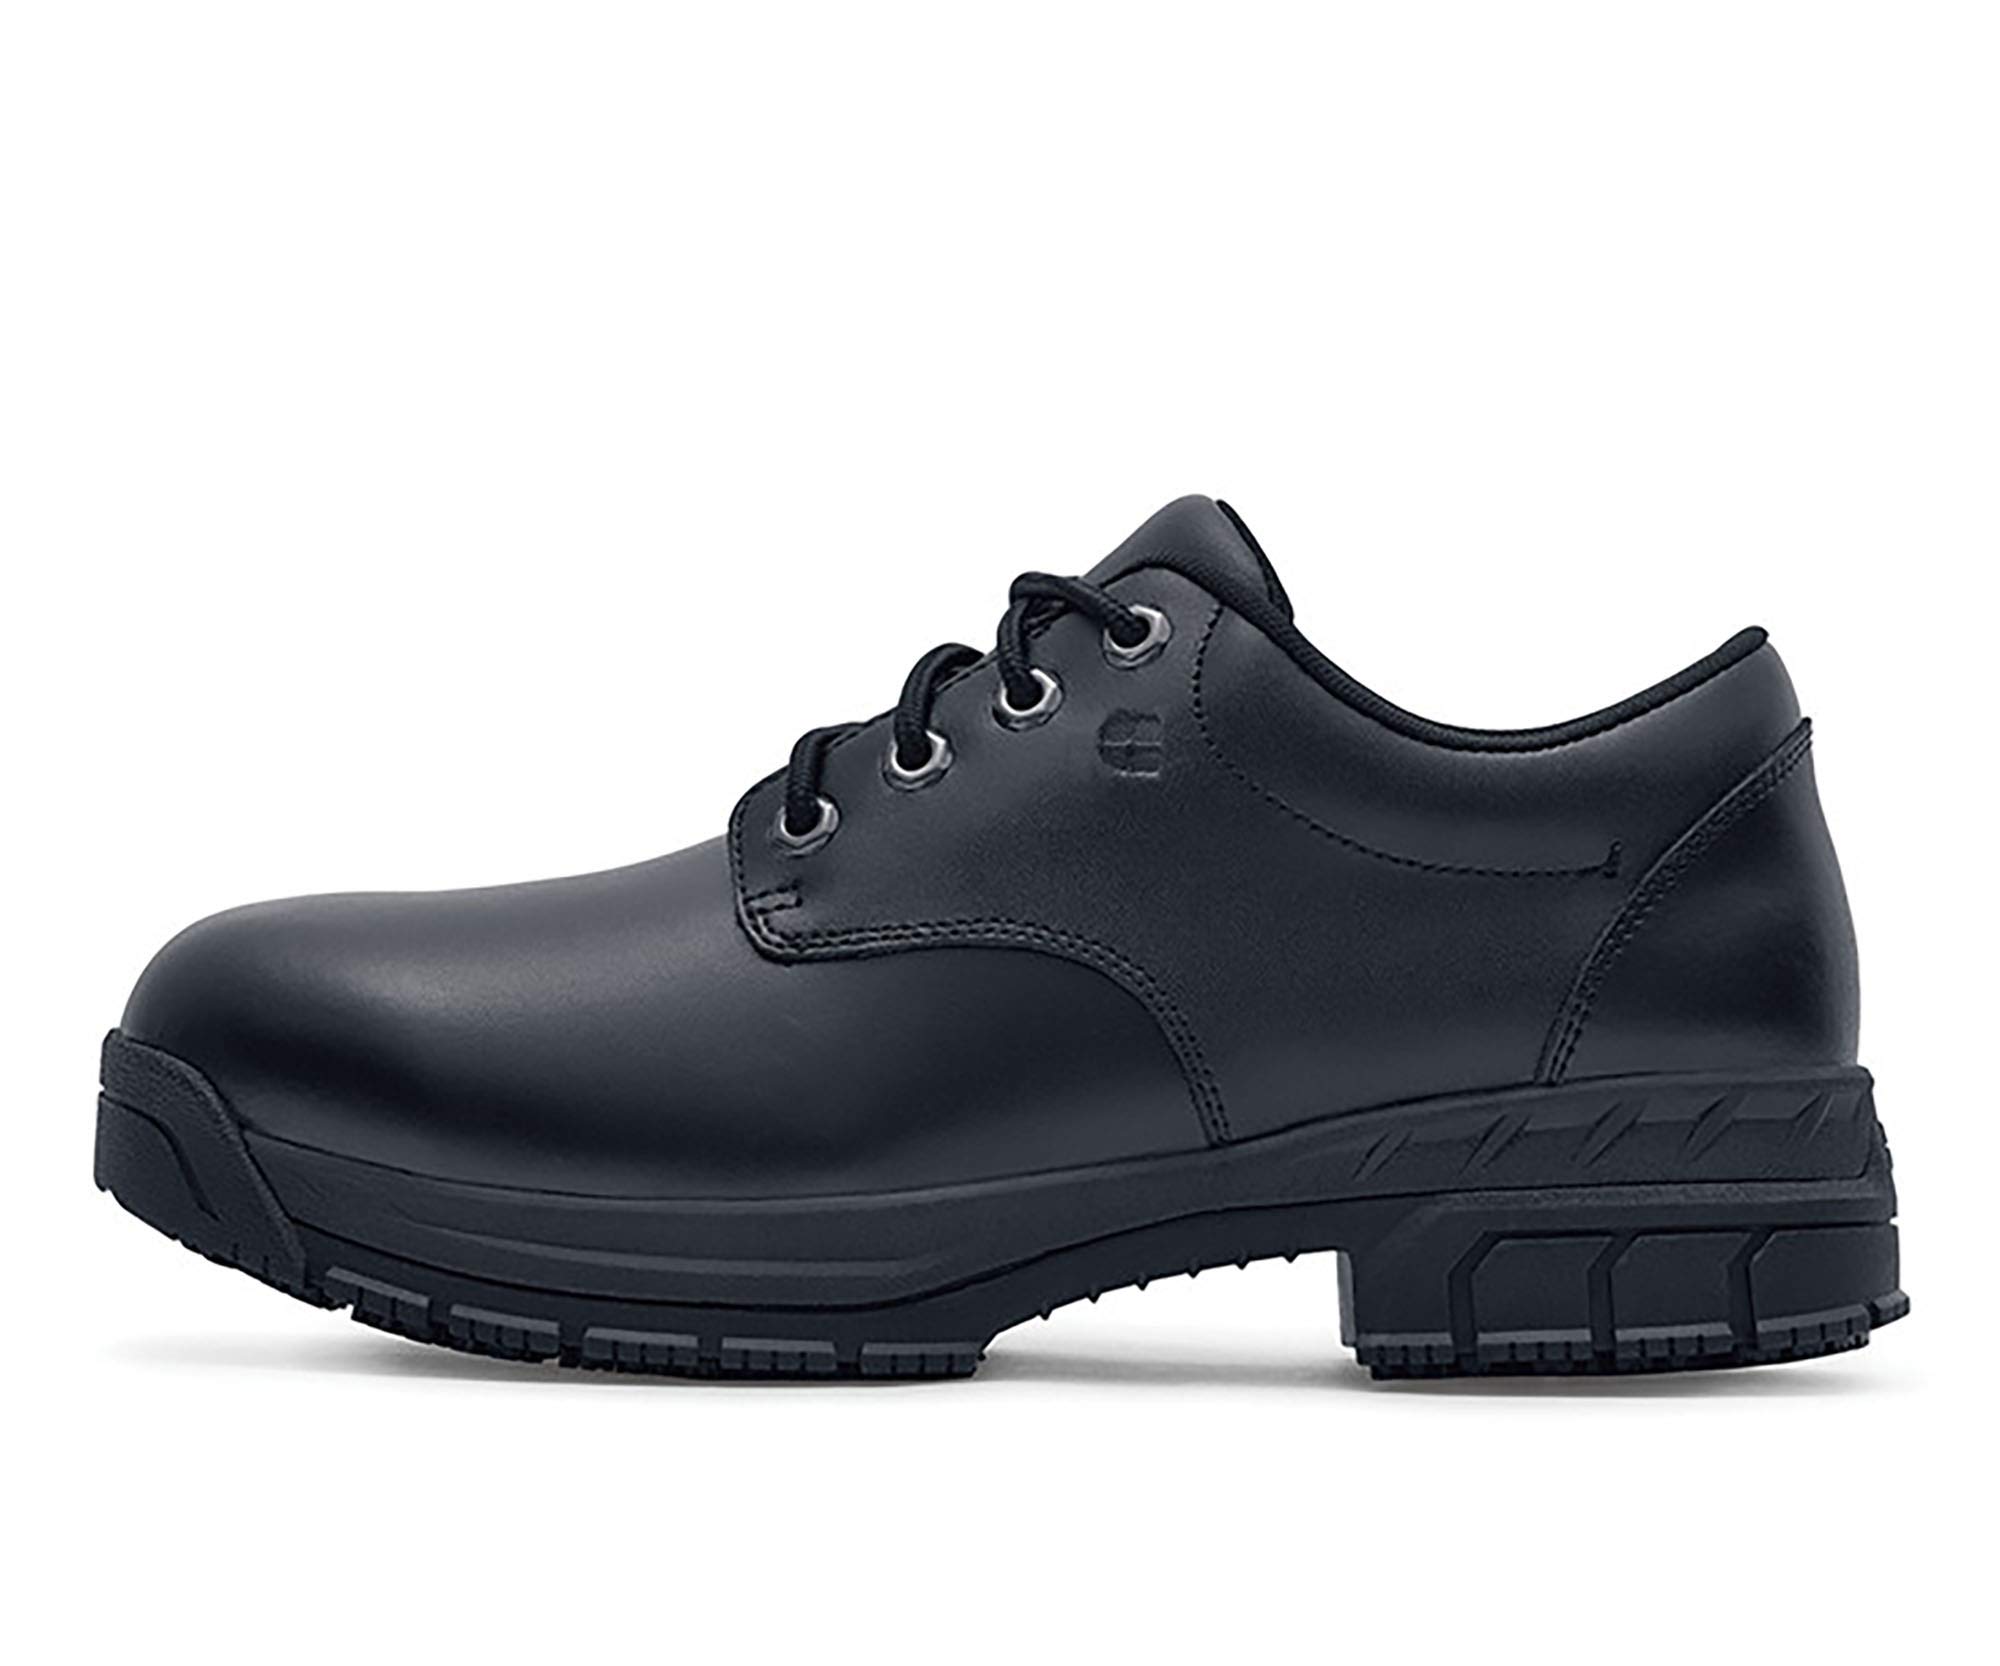 Shoes for Crews Men's Cade-Steel Toe Industrial Boot